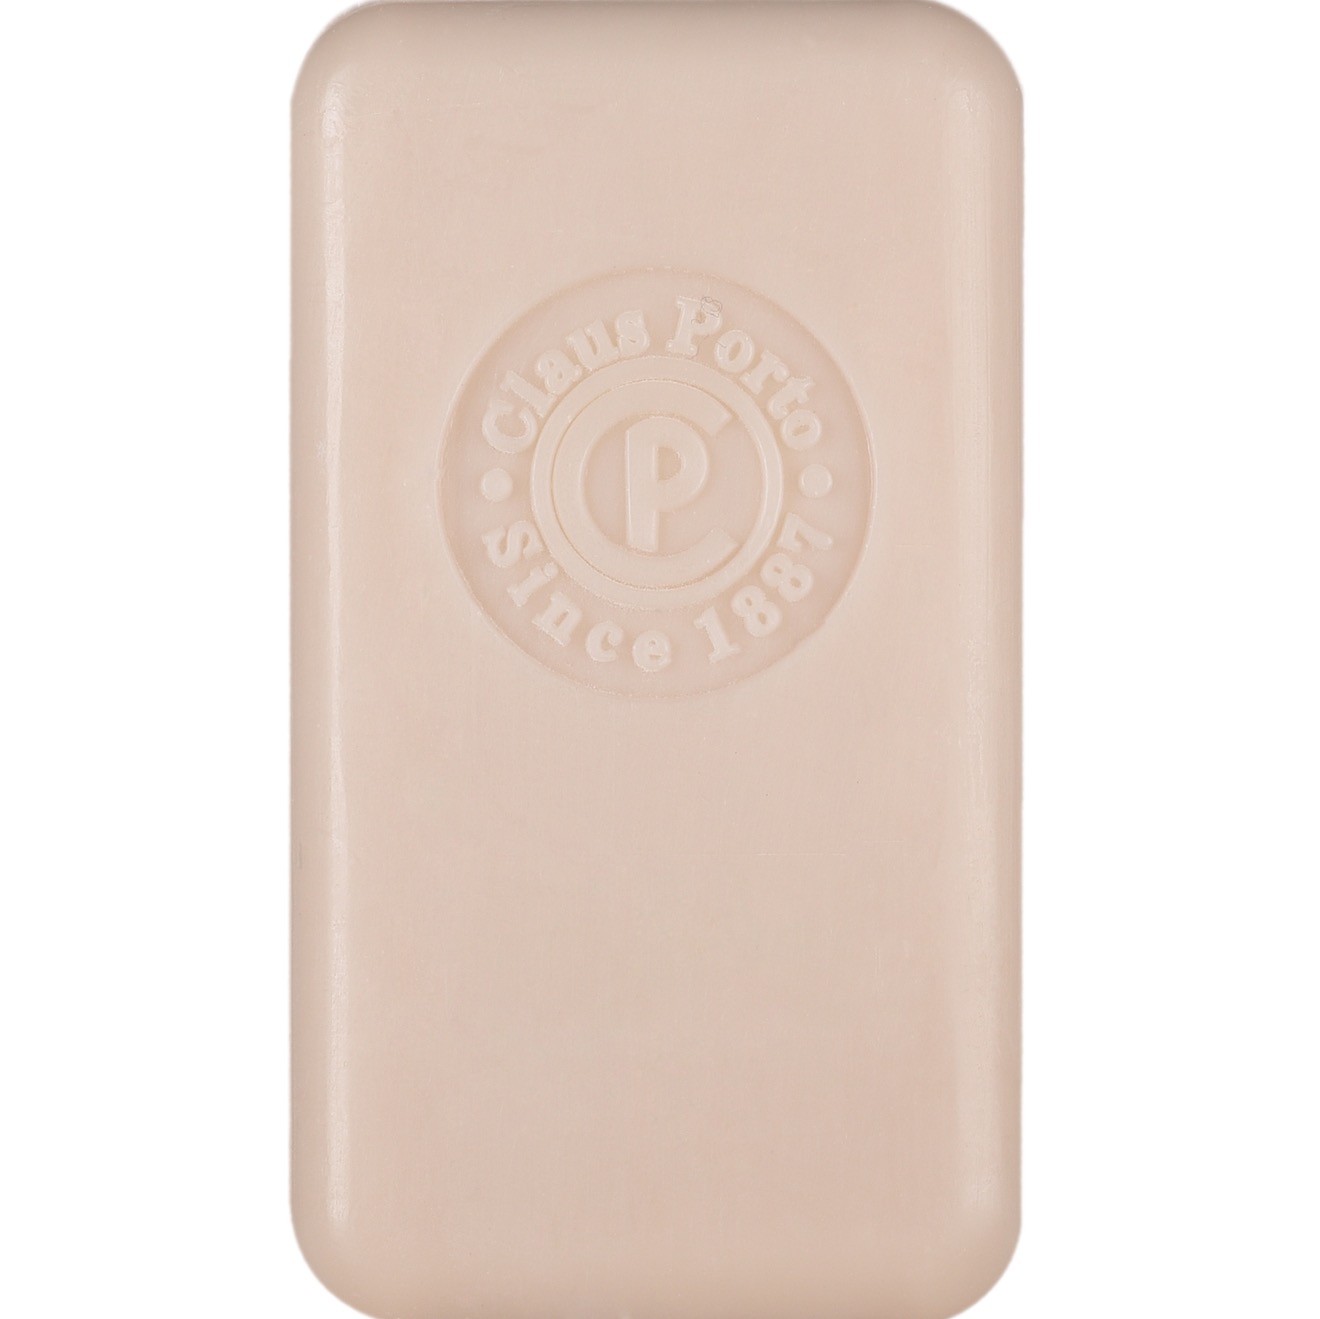 Claus Porto Mini Soap Bar 8741 Pear Sandalwood 50g - 1.3 - CP-CMS009